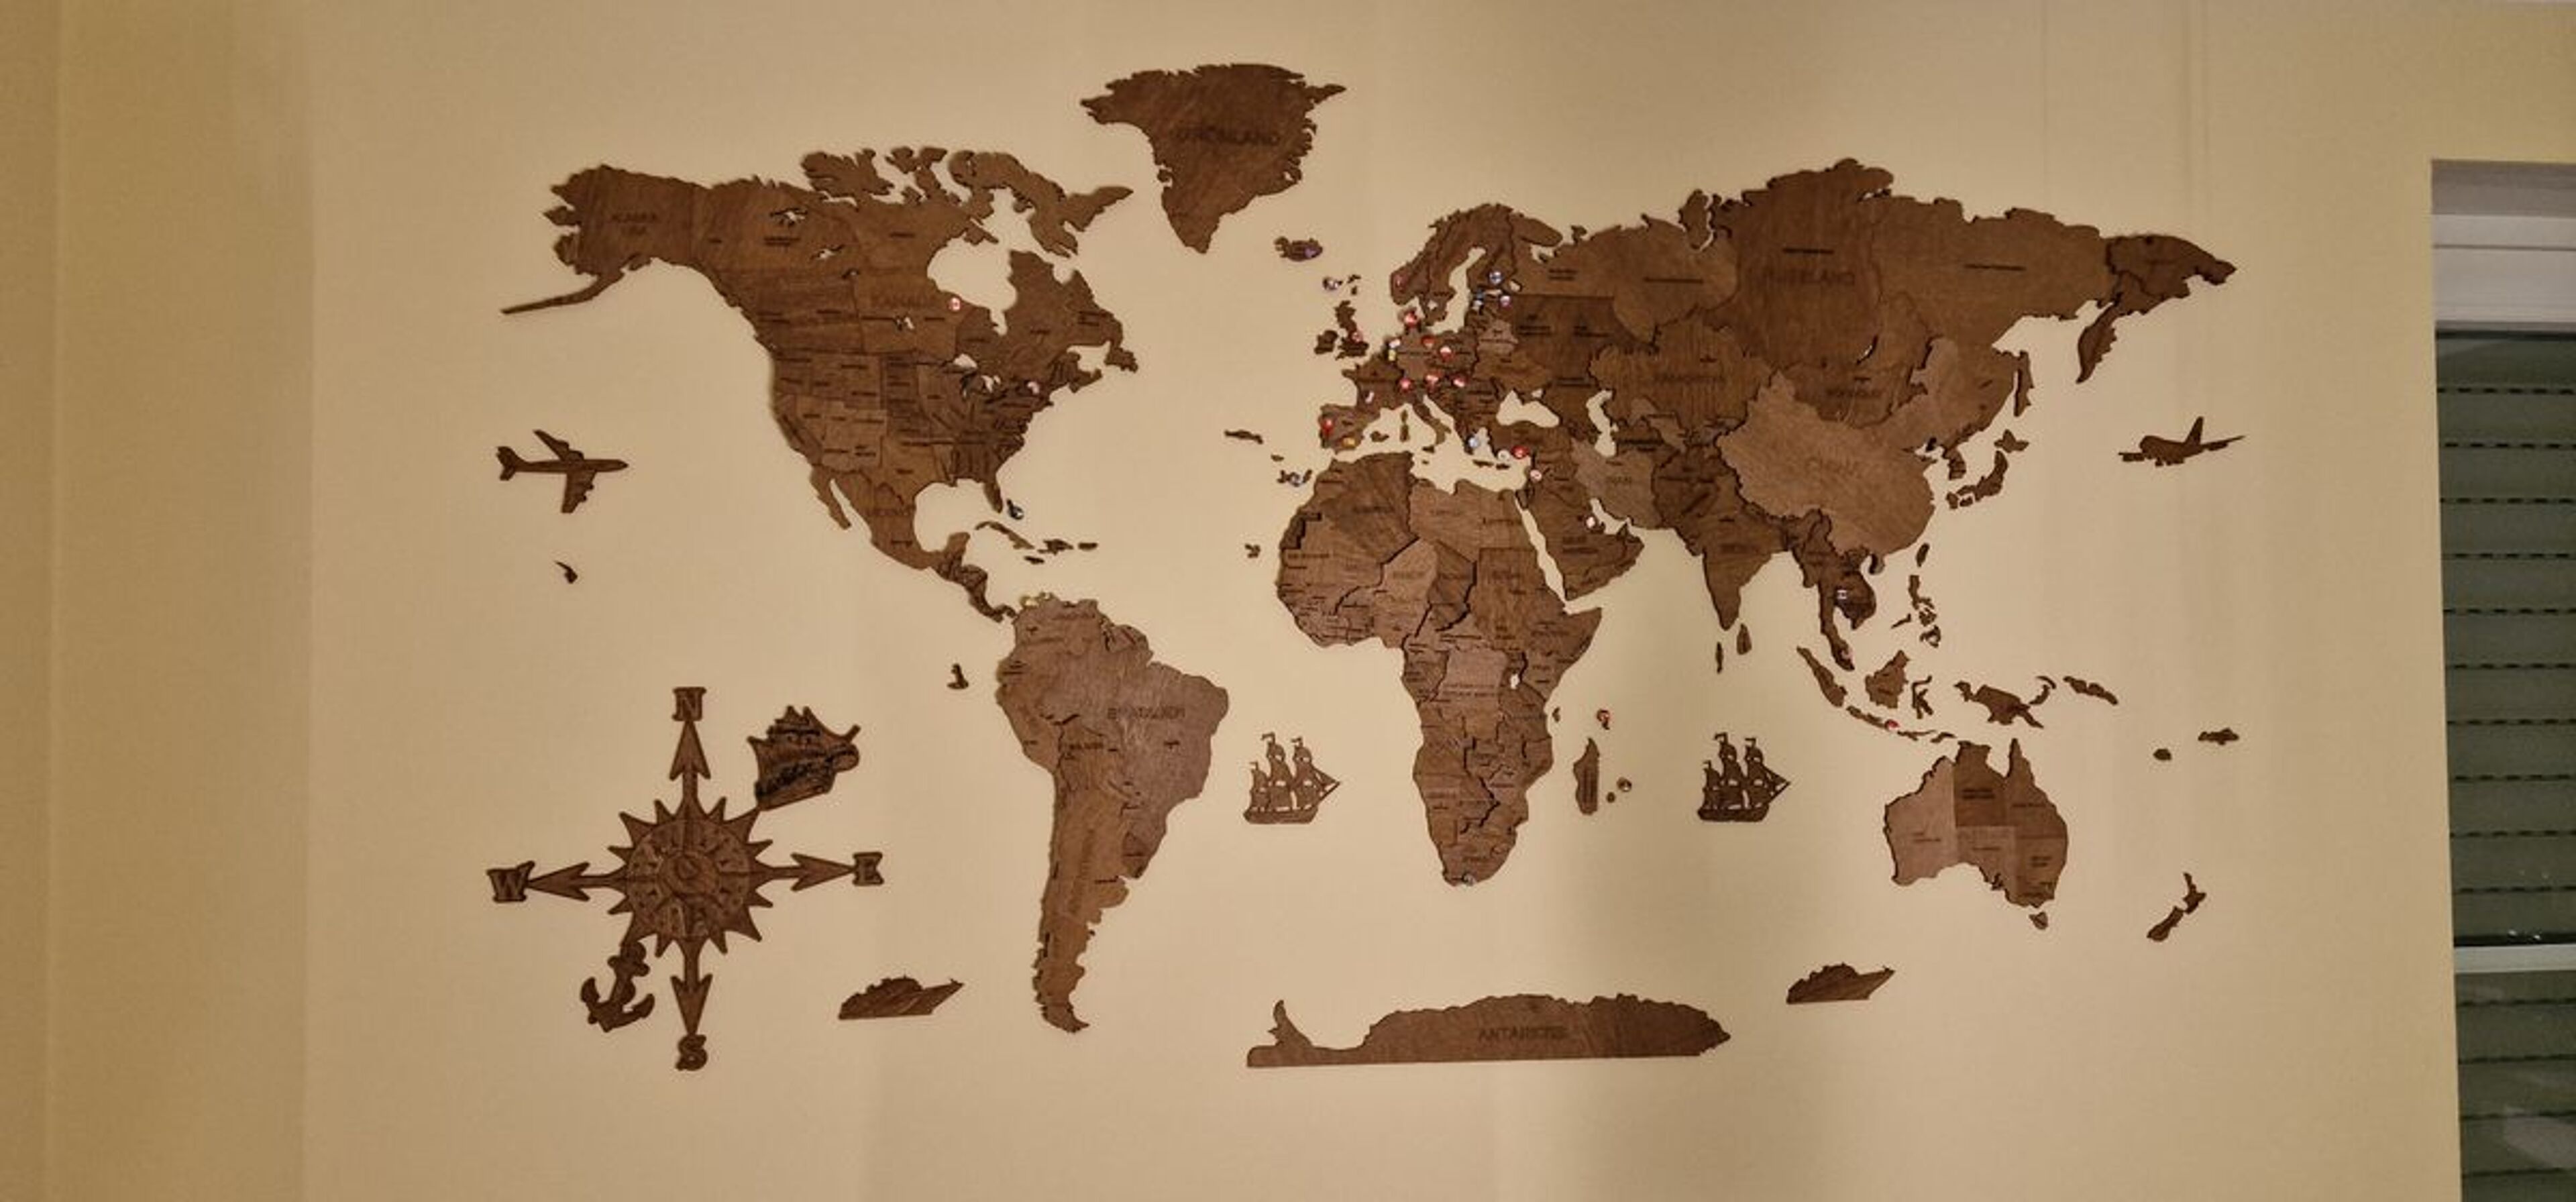 Reseña de Mapa del mundo de madera - imagen de Christian Wagner